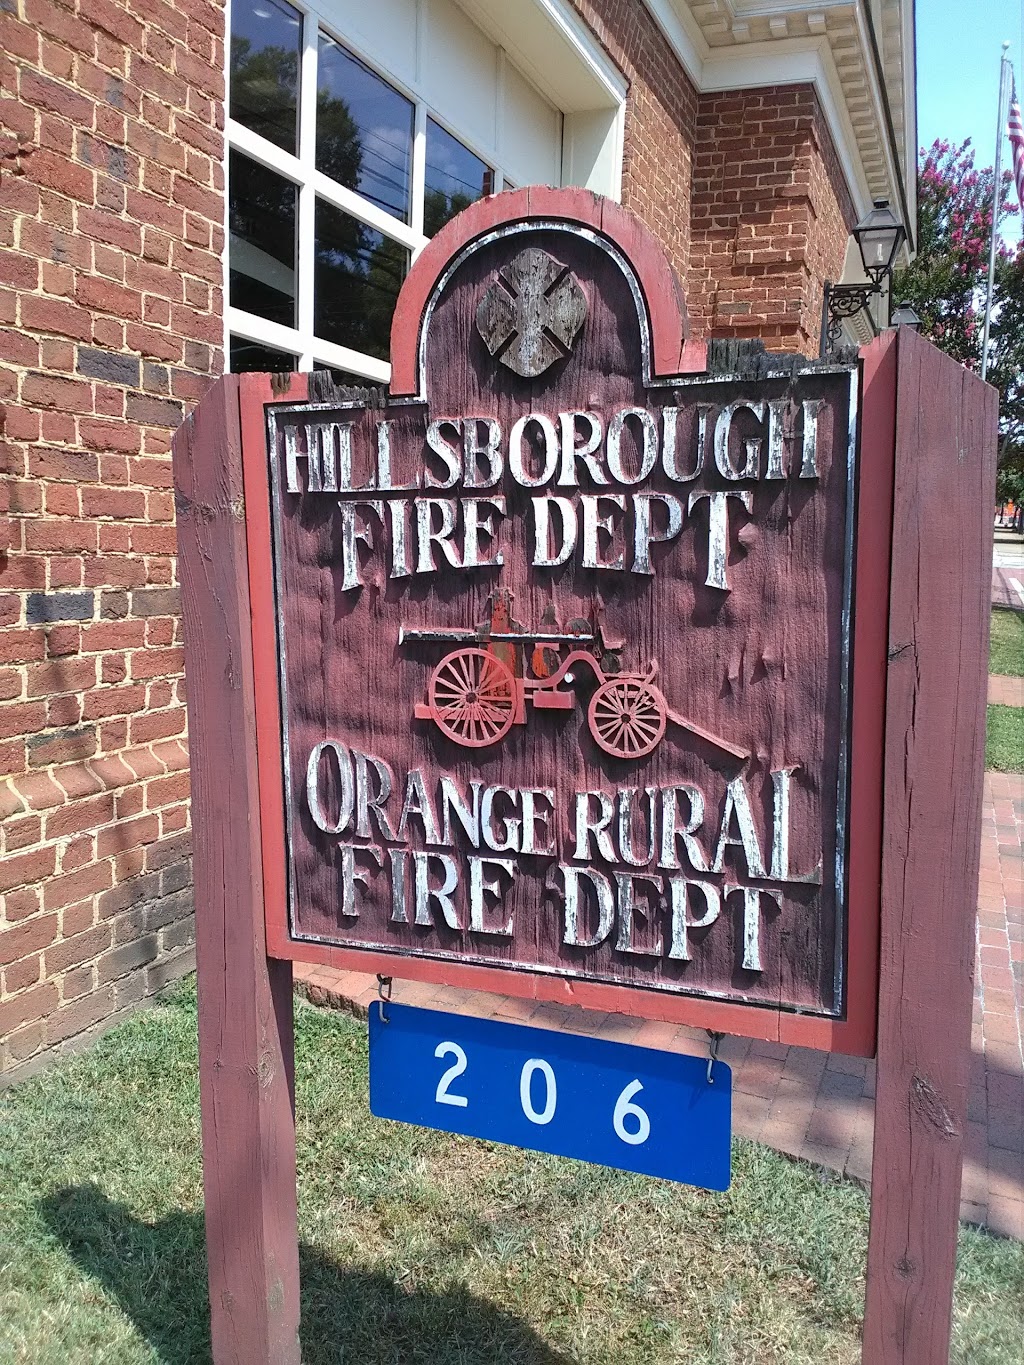 Hillsborough Fire Department | 206 S Churton St, Hillsborough, NC 27278 | Phone: (919) 732-7911